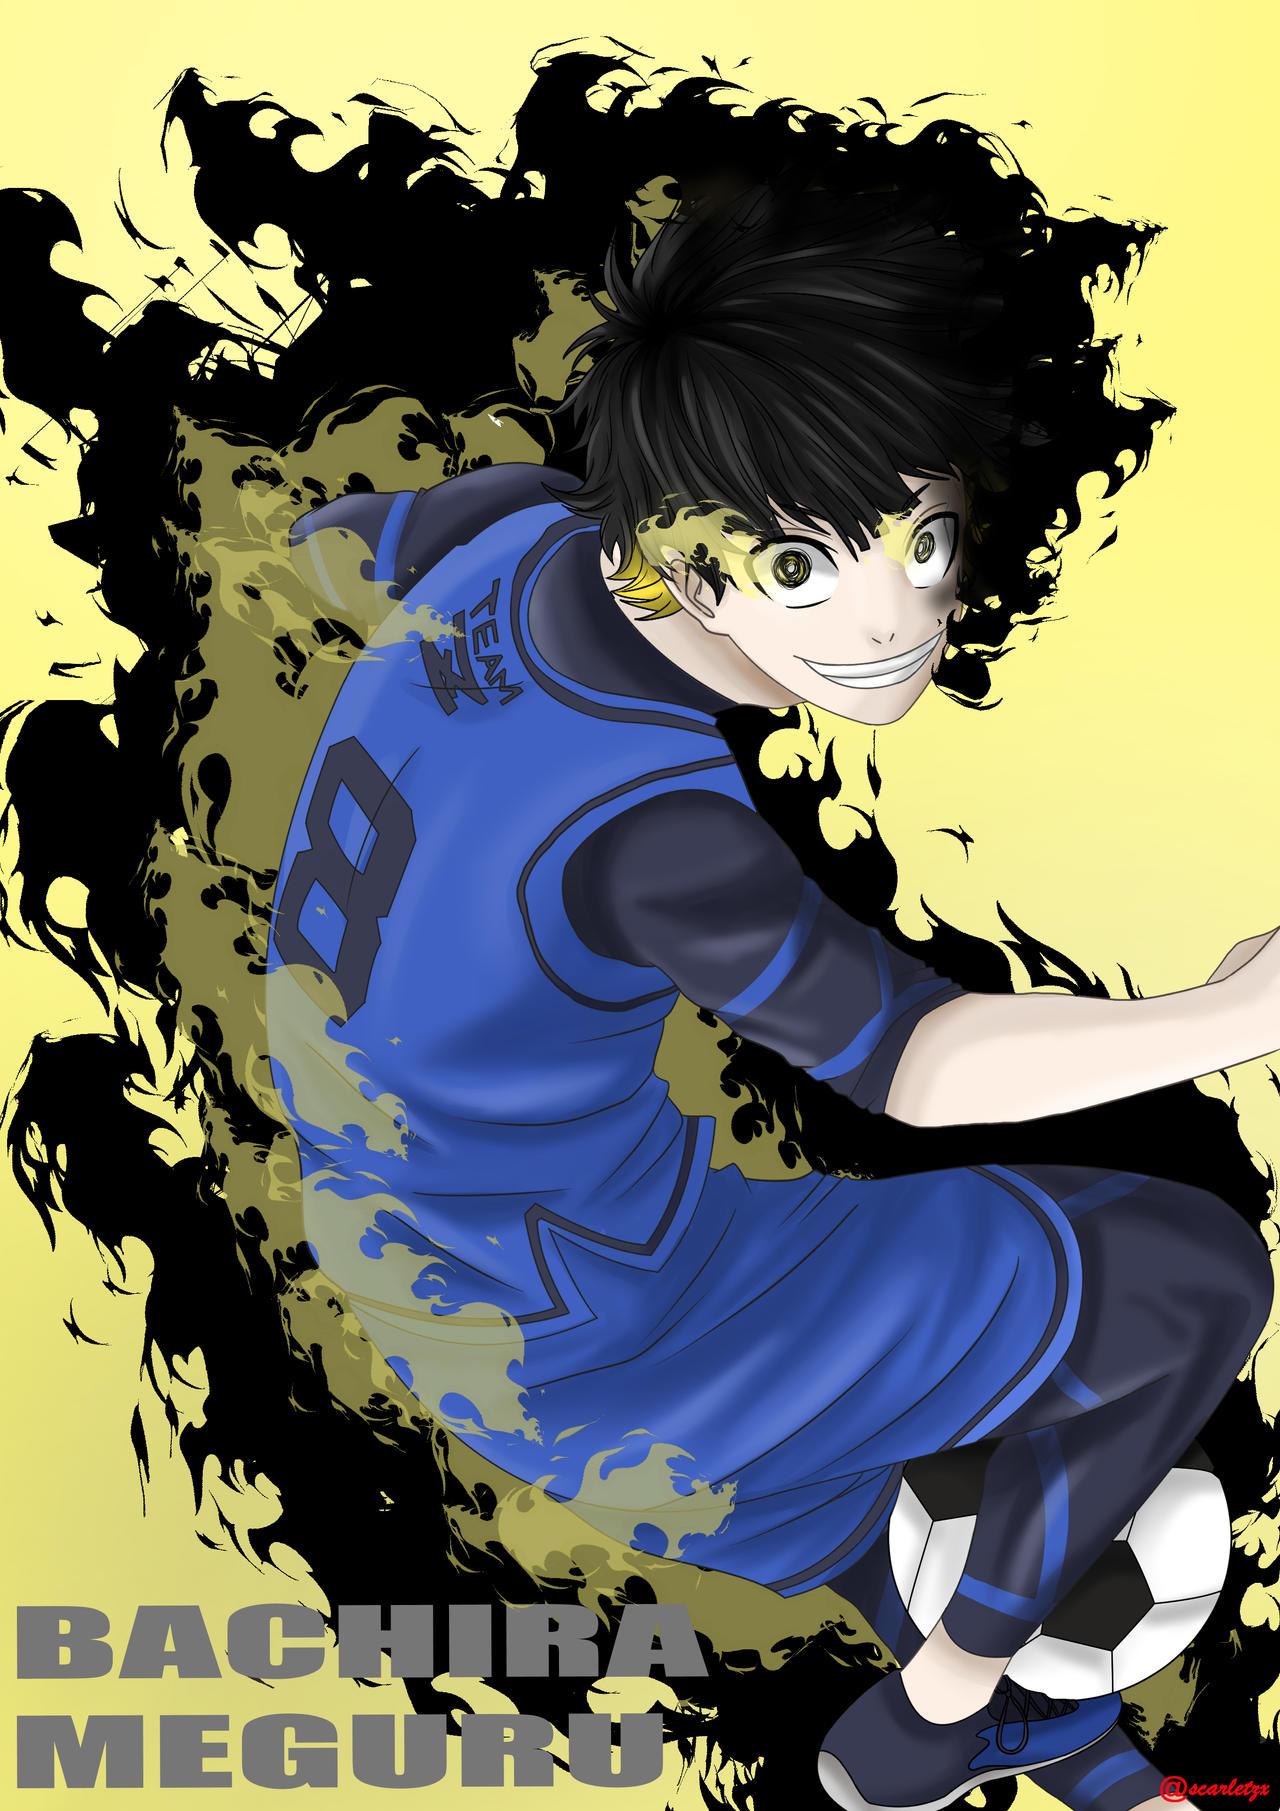 Bachira Meguru [Illustration Making]- Blue Lock Anime Fan Art